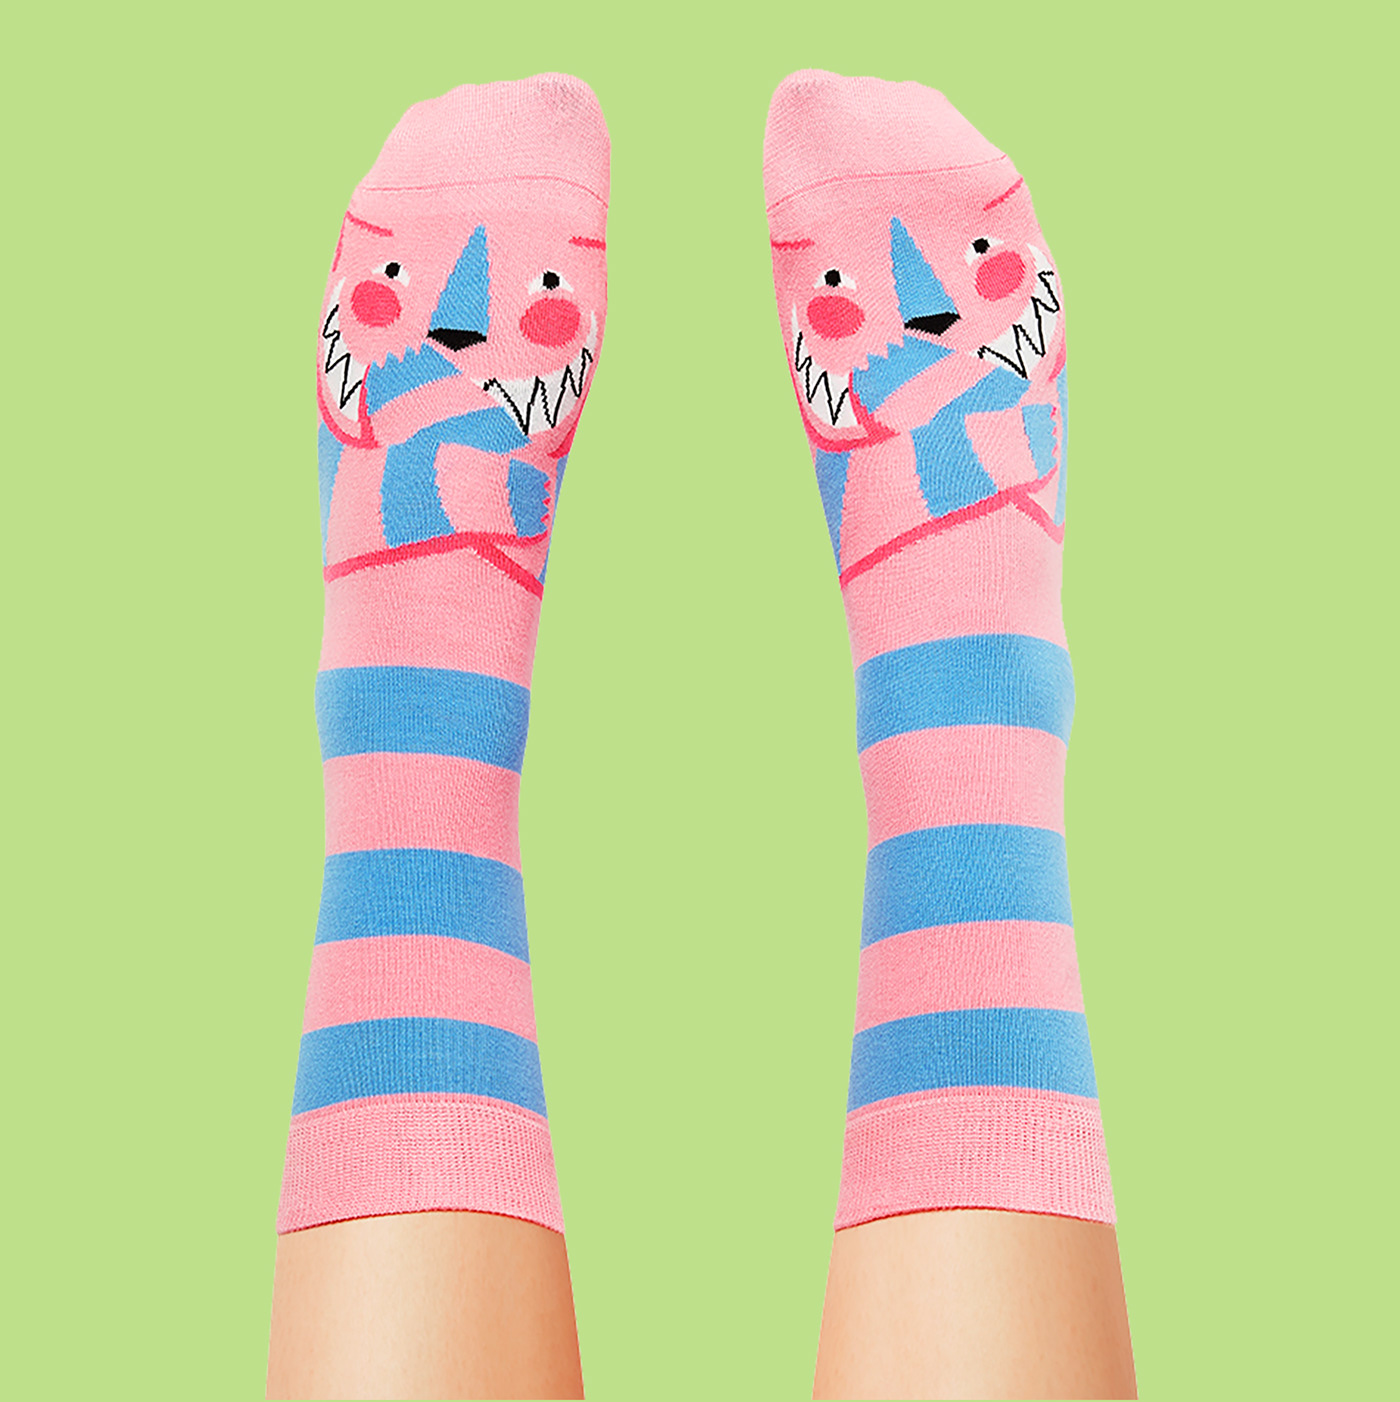 alice in wonderland digital illustration fashion design mushroom packaging design socks socks design tea party